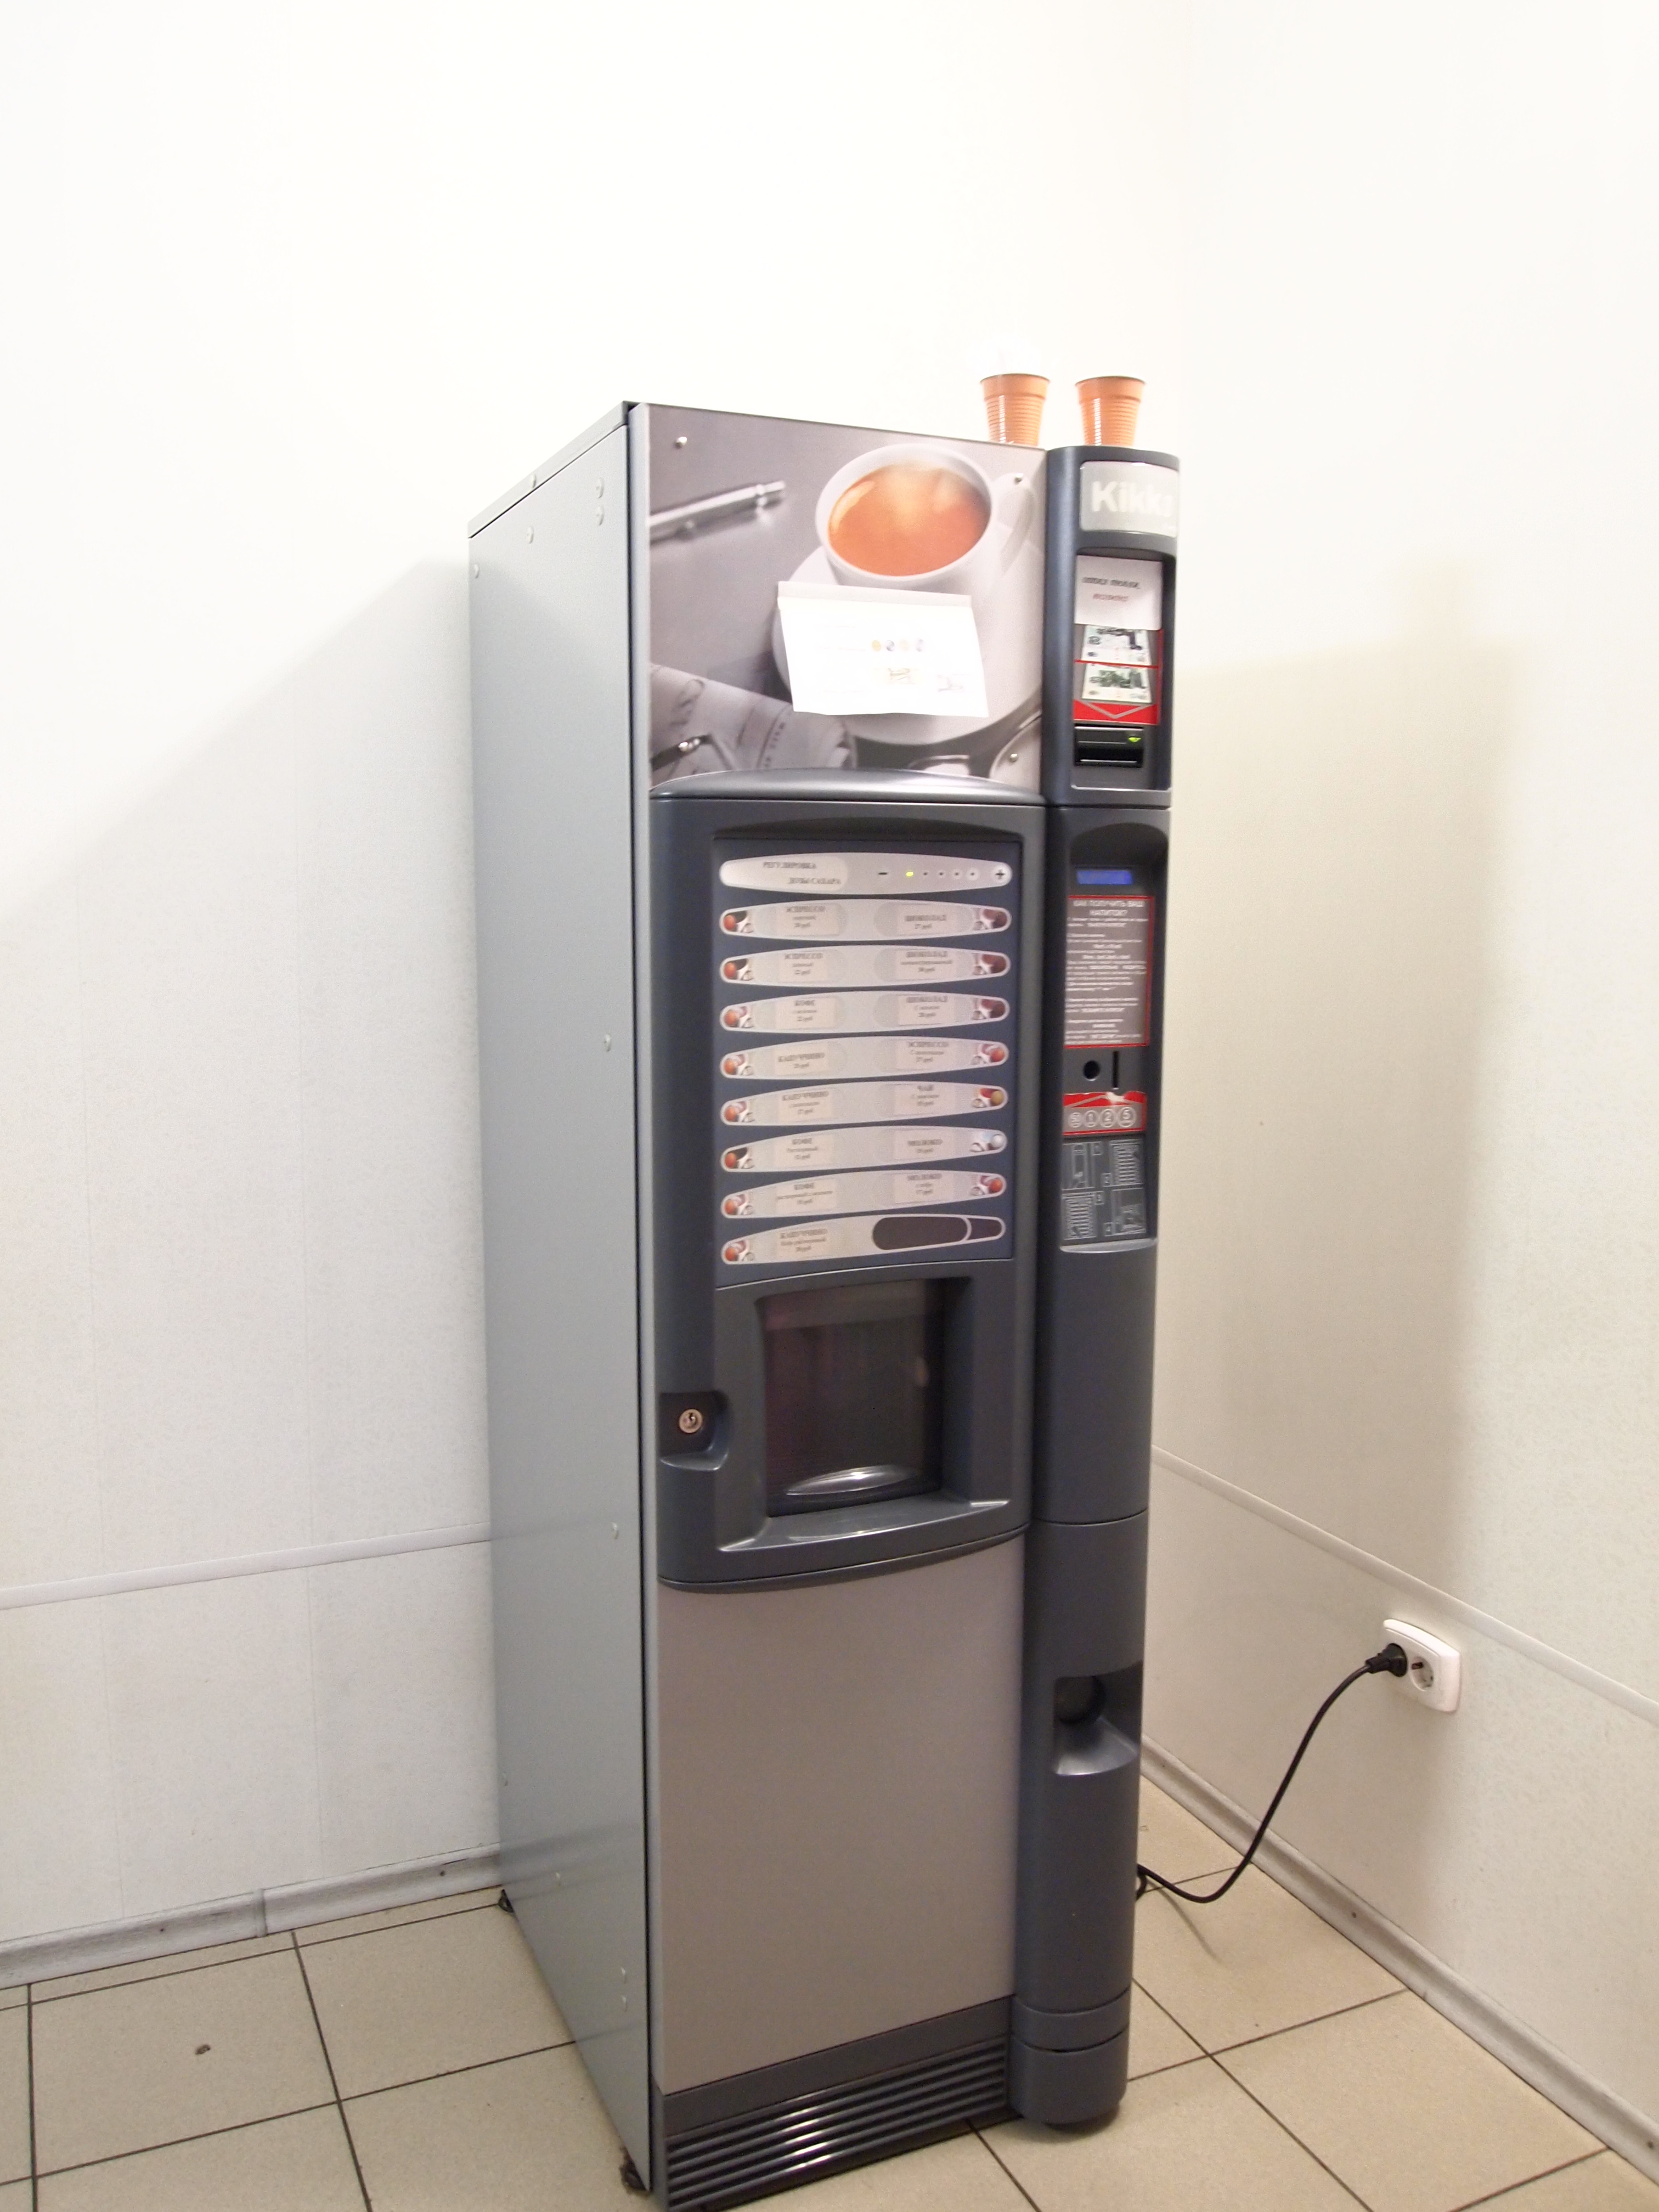 https://upload.wikimedia.org/wikipedia/commons/4/4b/Vending_machine_coffee..jpg